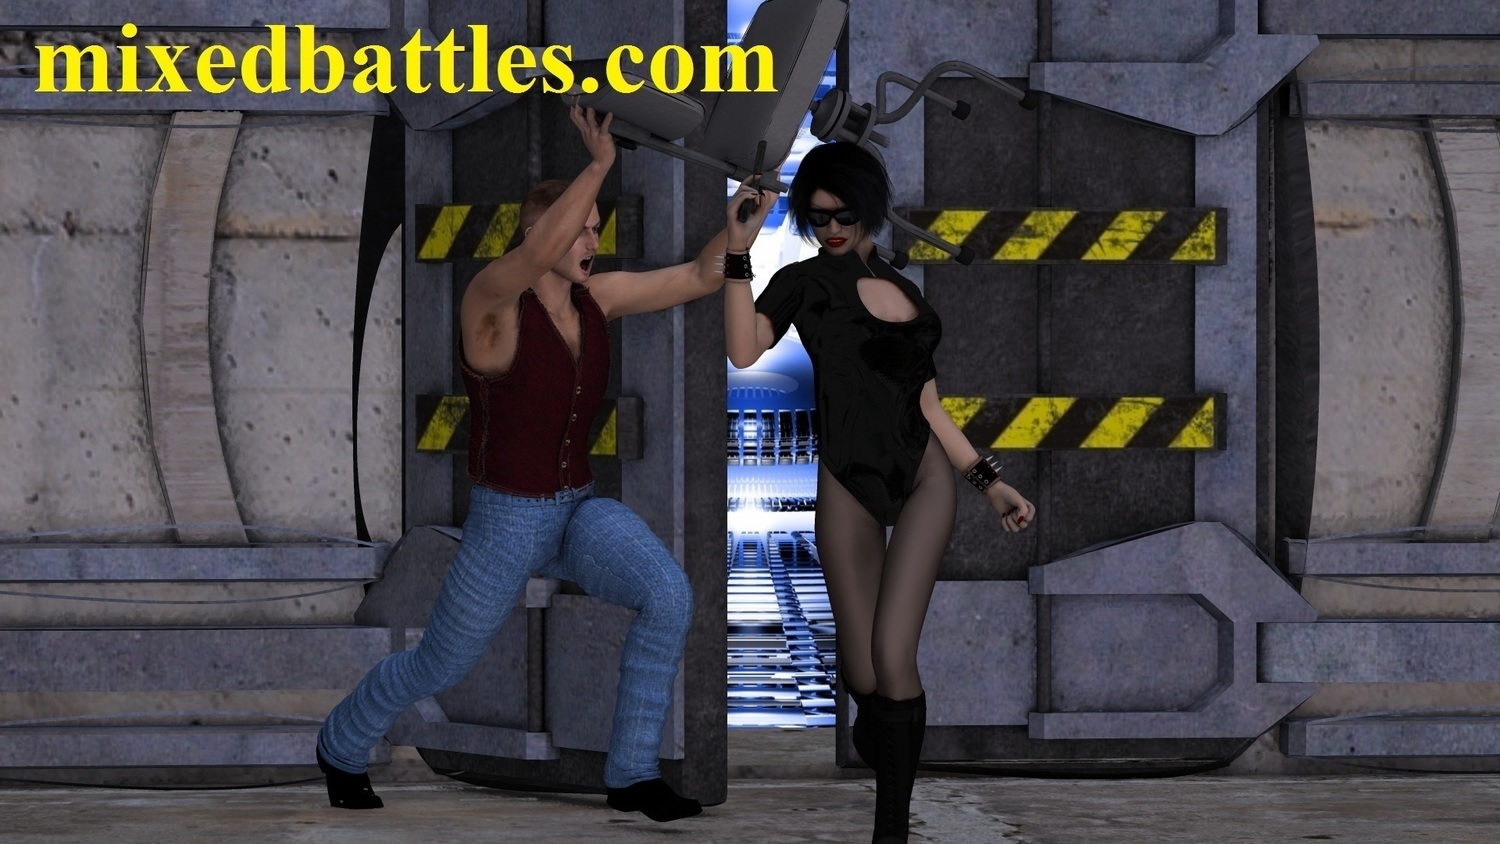 police woman vs man fighting